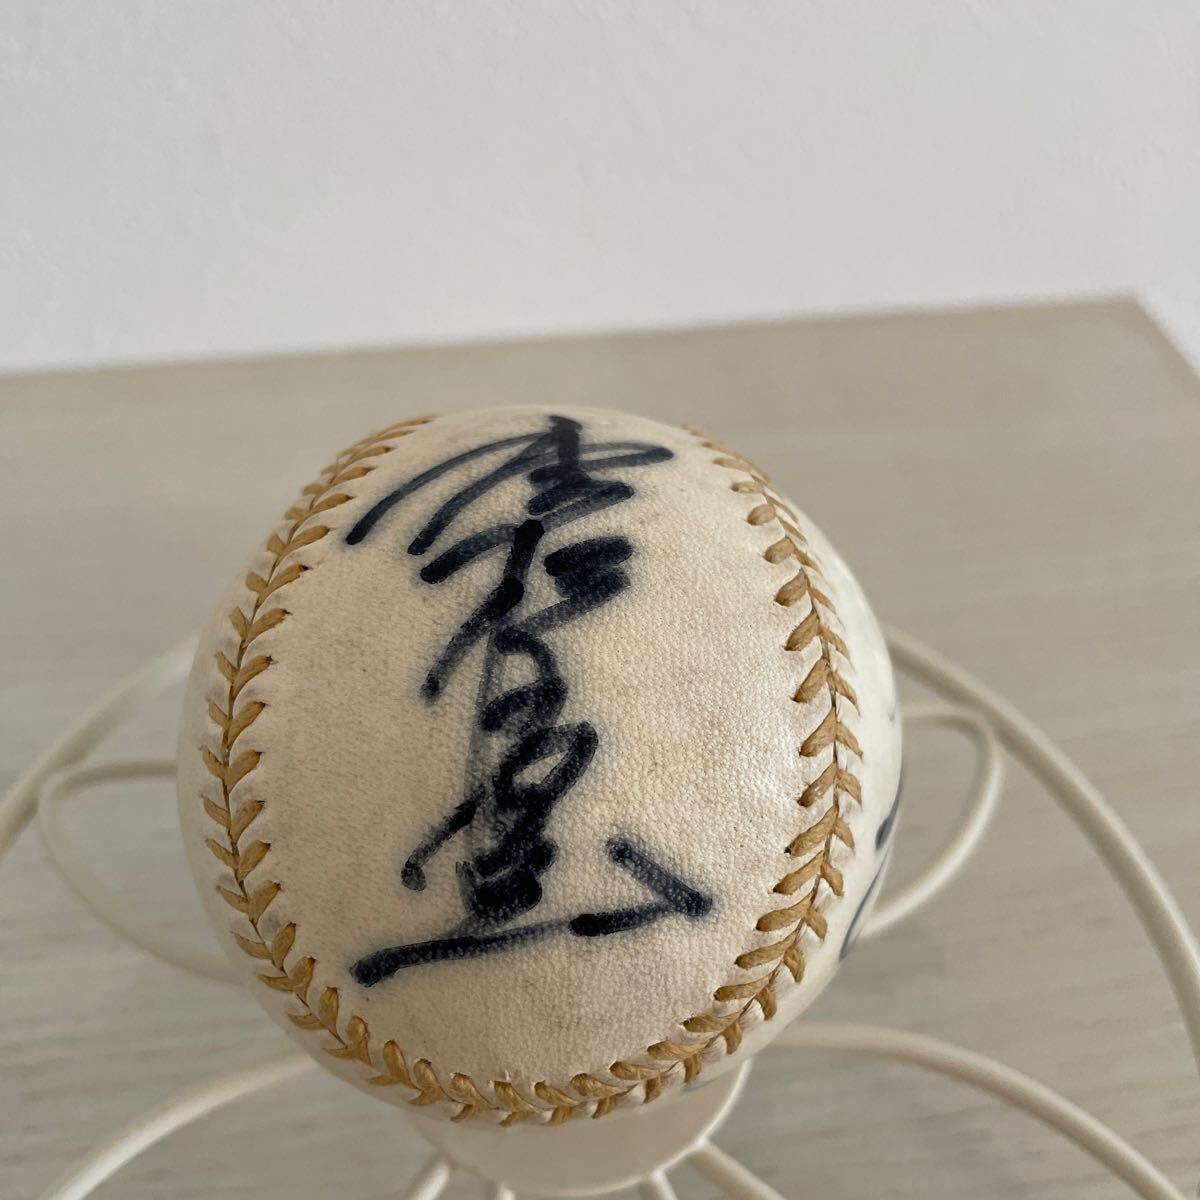  autograph autograph ball autograph ball ball baseball .. virtue autograph Showa era 30 period that time thing west iron lion z? Taiyou ho e-ruz